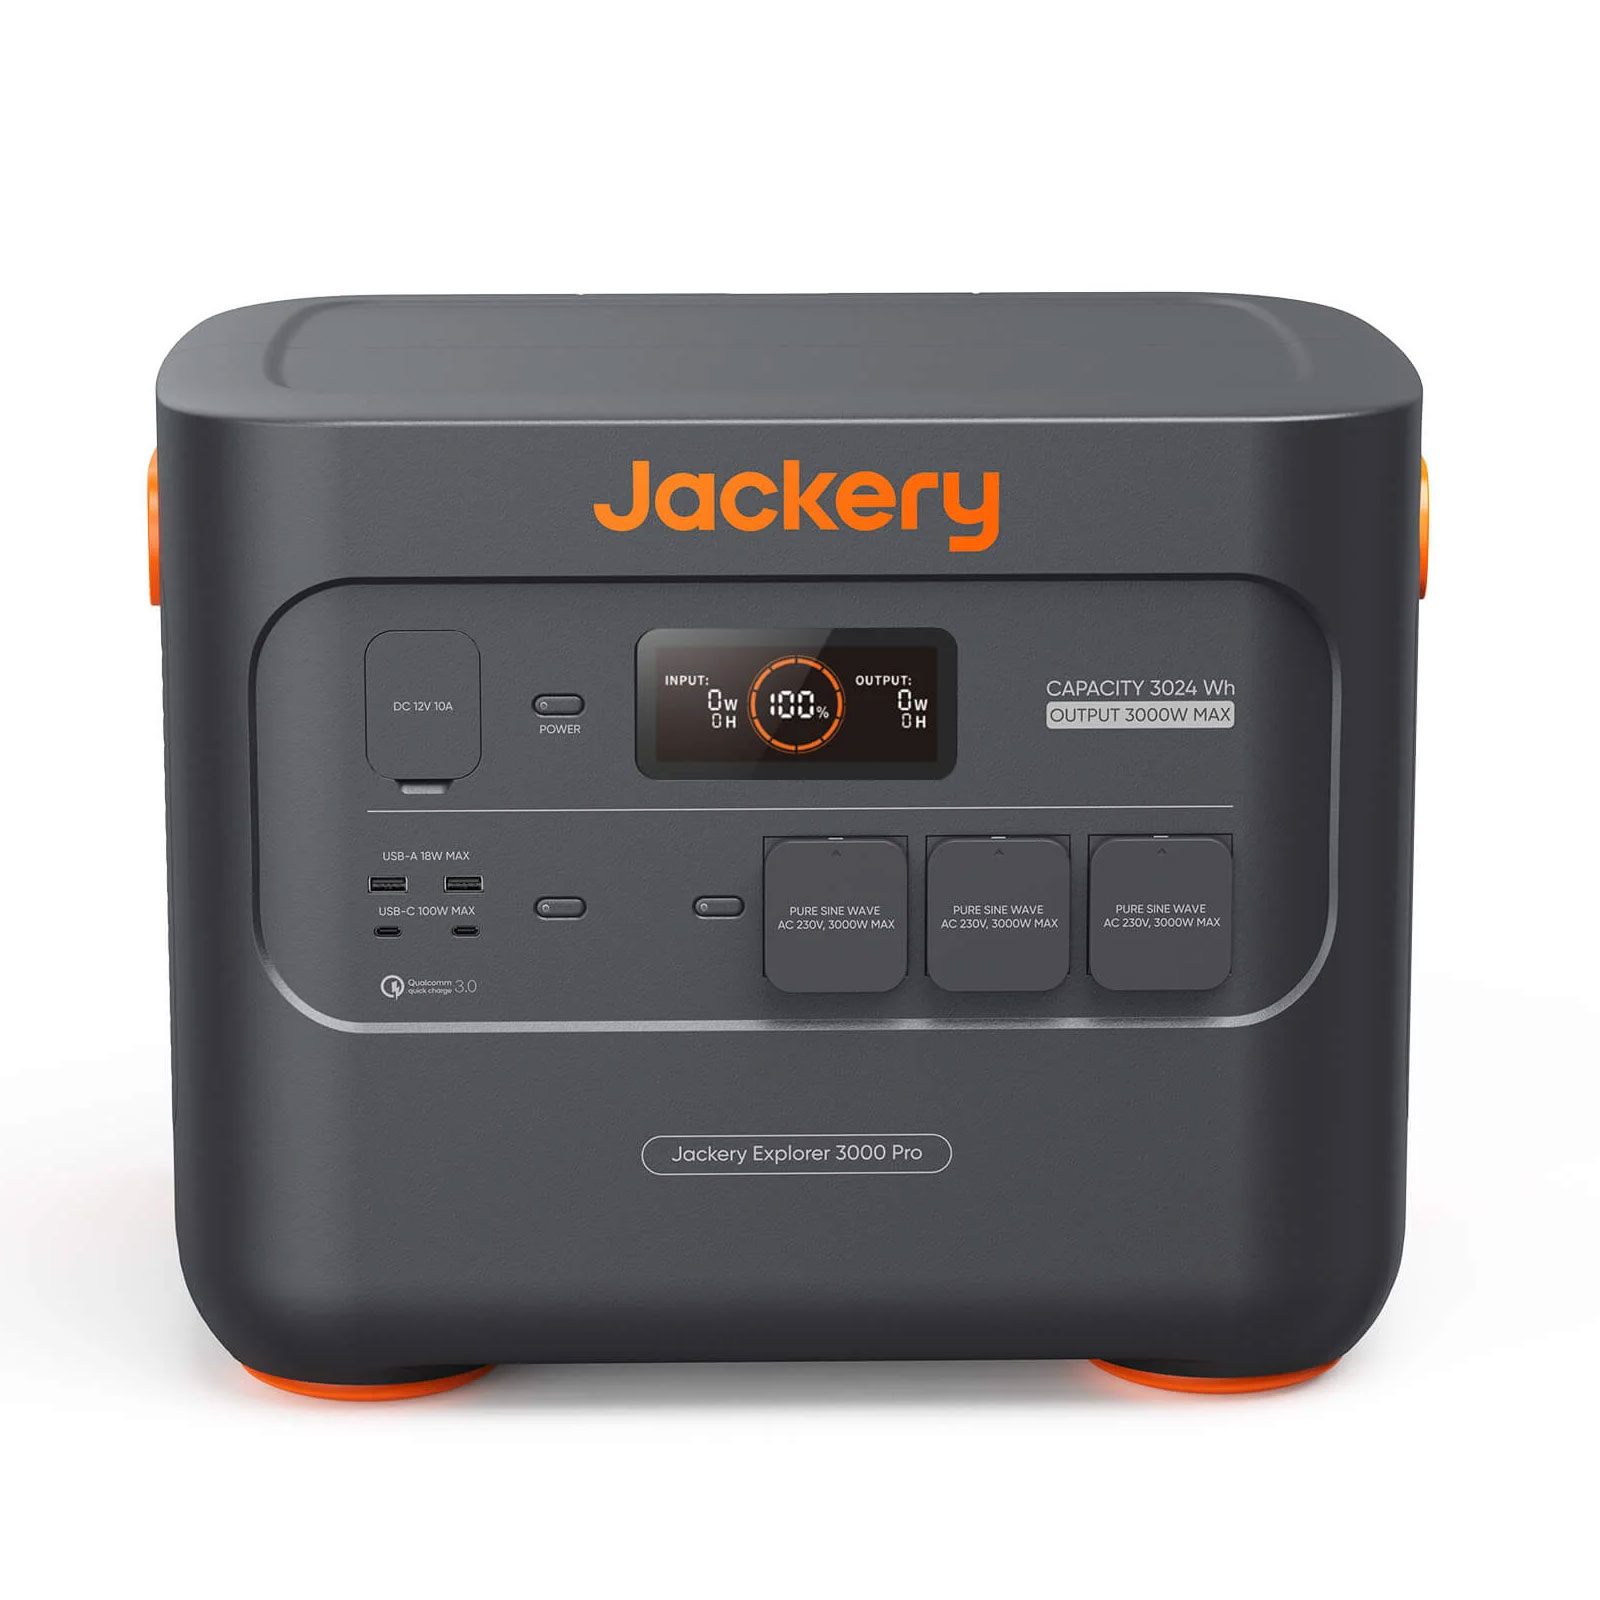 Jackery Explorer 3000 Pro Powerstation